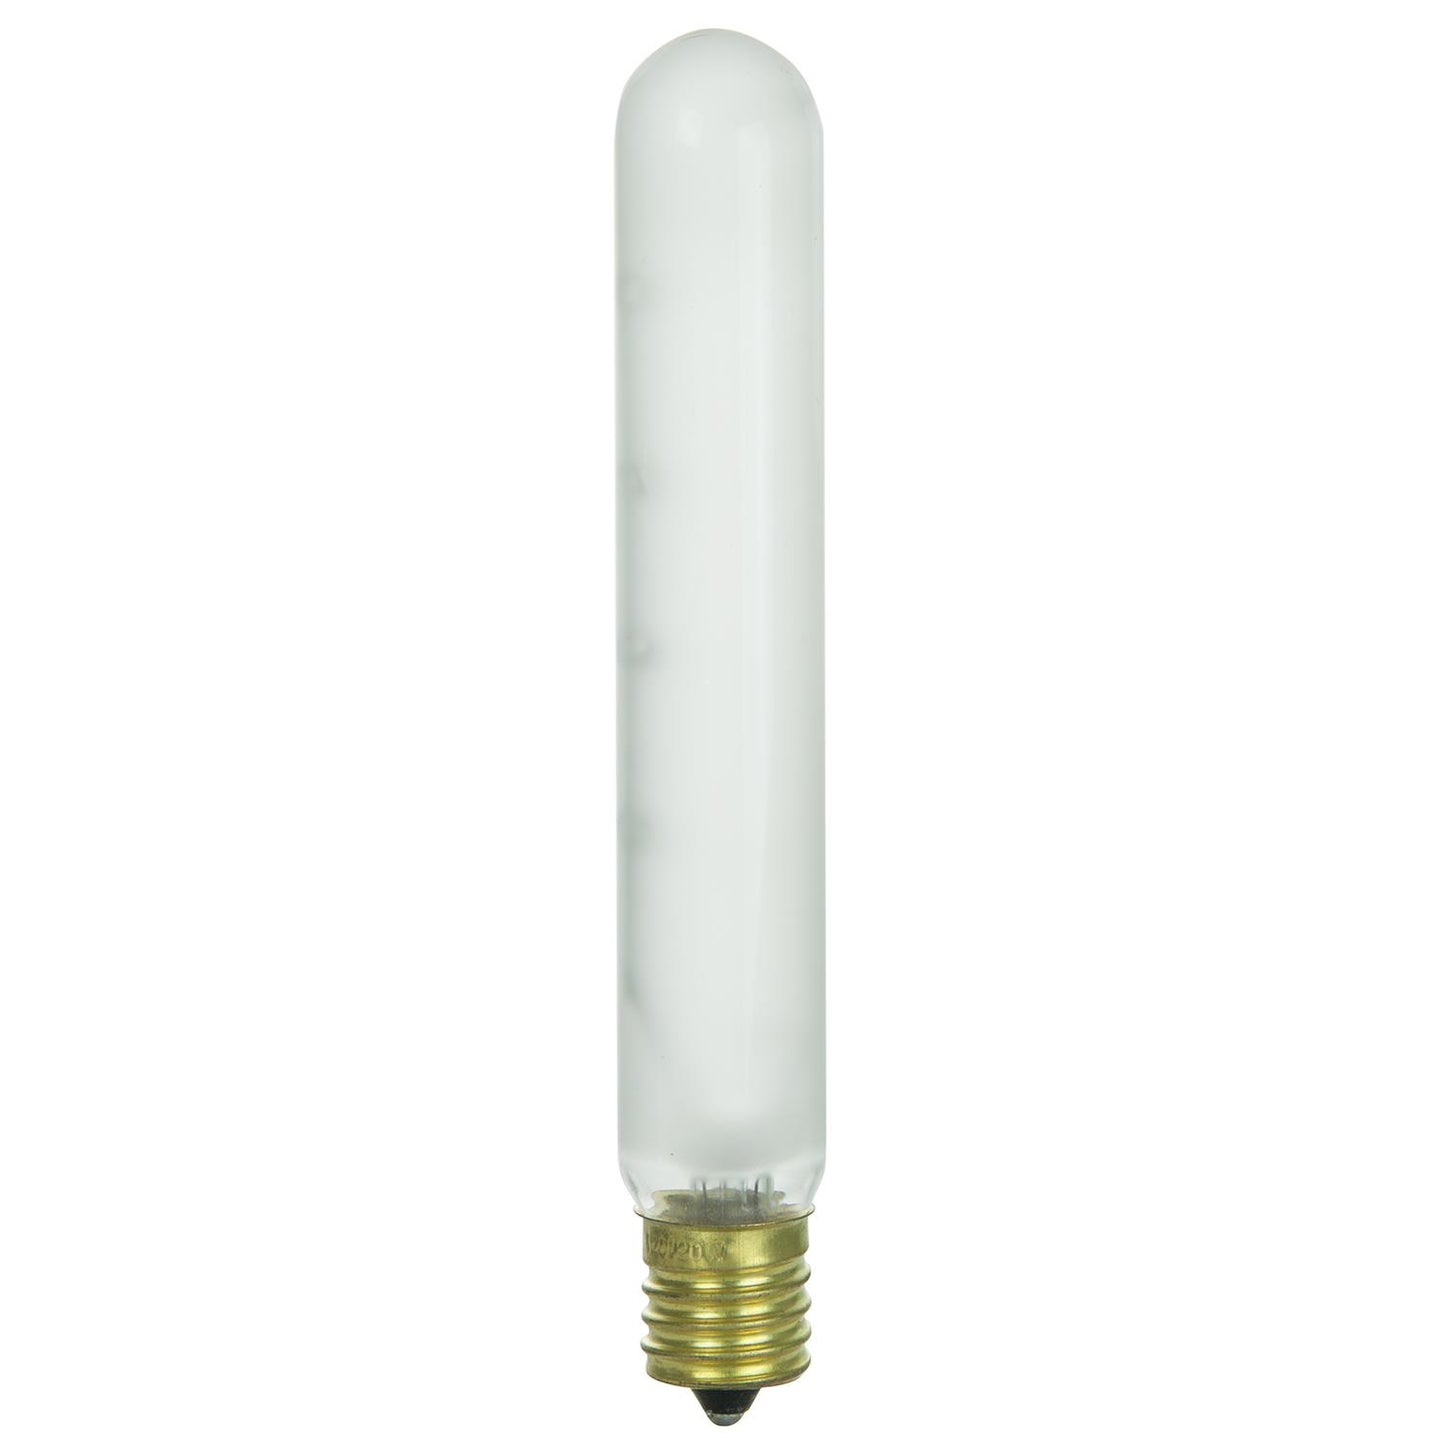 Sunlite Incandescent T6.5 Tubular Light Bulb, E17 Intermediate Base, 40 Watts, 290 Lumens, Dimmable, Mercury Free, 2600K Warm White, Frost Glass, 25 Count